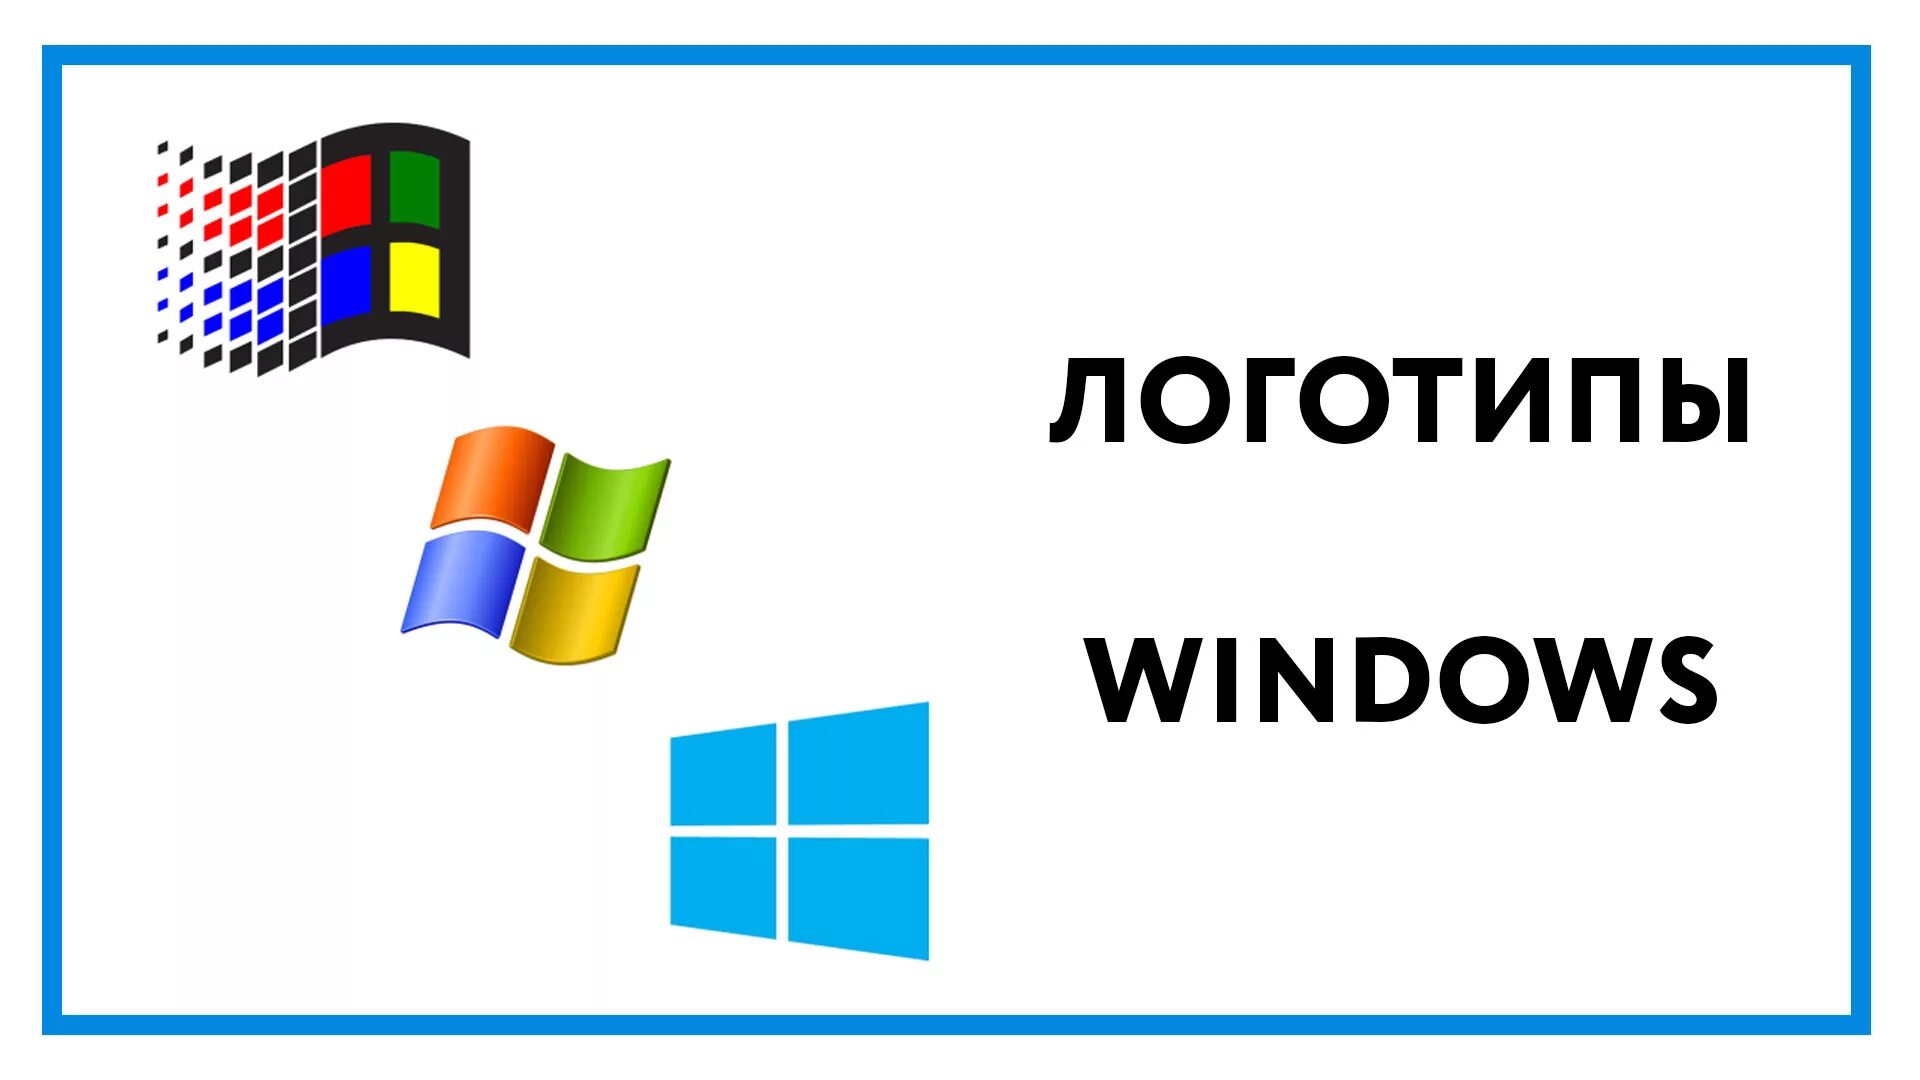 Логотип Windows. Эволюция логотипа Windows. Все логотипы виндовс. Самый первый логотип Windows.